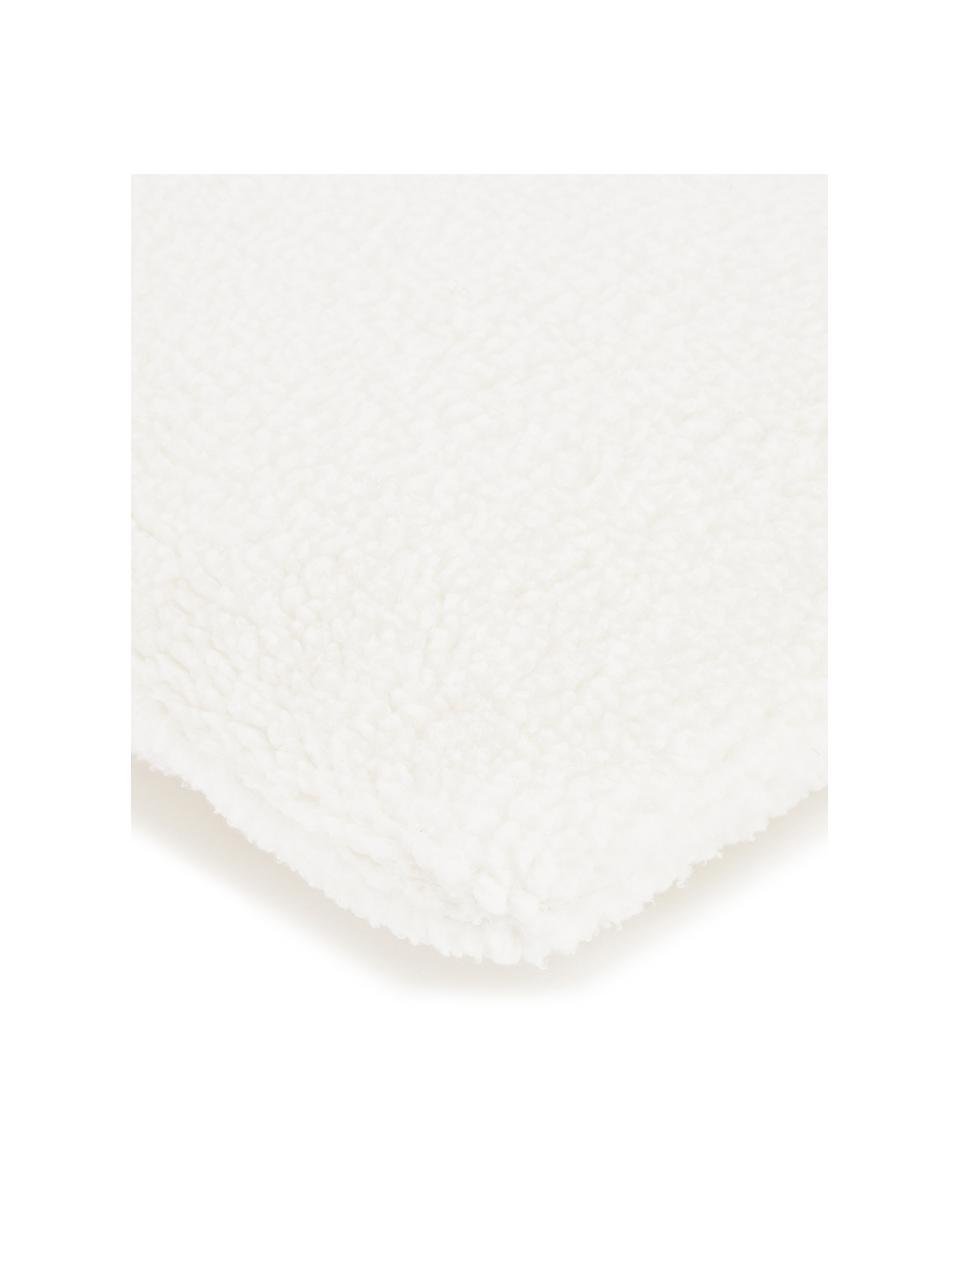 Flauschige Teddy-Kissenhülle Mille in Creme, Vorderseite: 100% Polyester (Teddyfell, Rückseite: 100% Polyester (Teddyfell, Creme, B 30 x L 50 cm